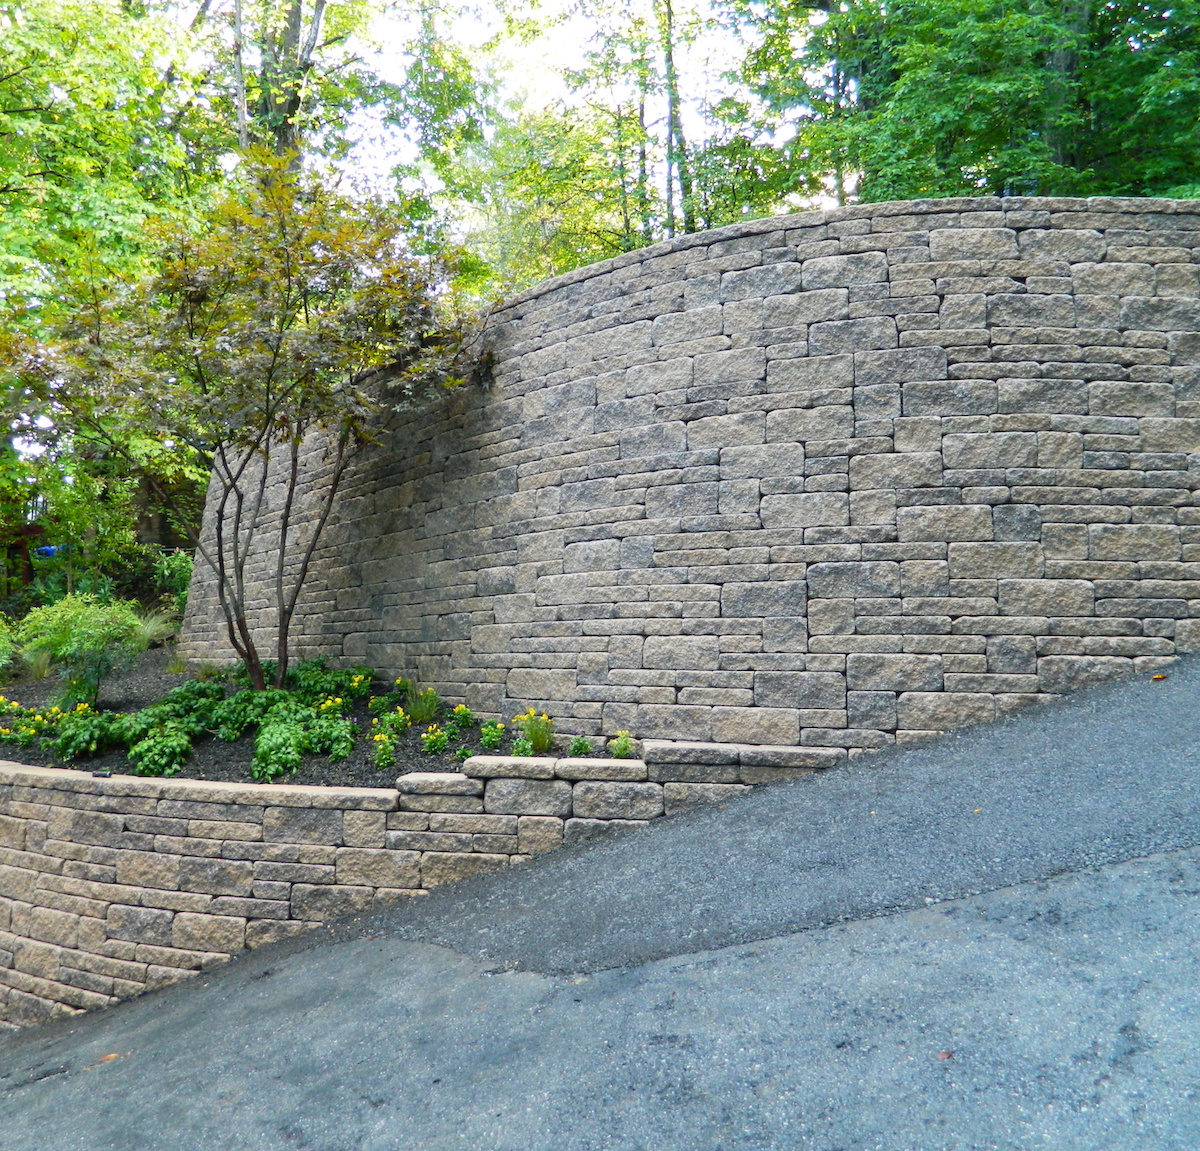 decorative concrete block retaining wall